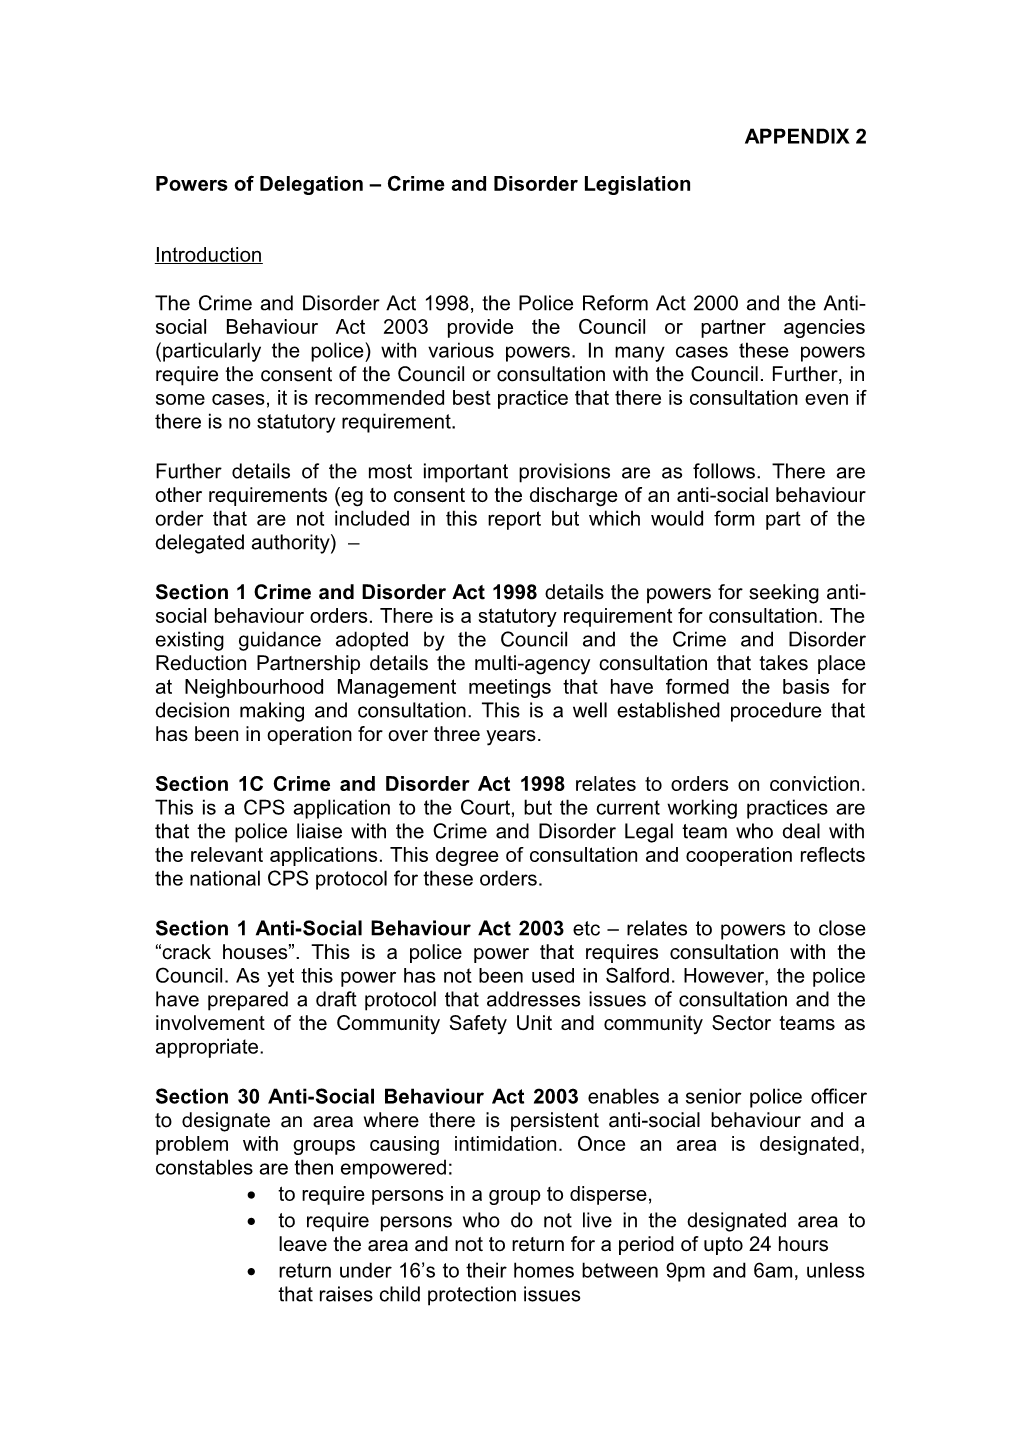 Salford Crime and Disorder Reduction Partnership: Anti-Social Behaviour Act 2003- Dispersal